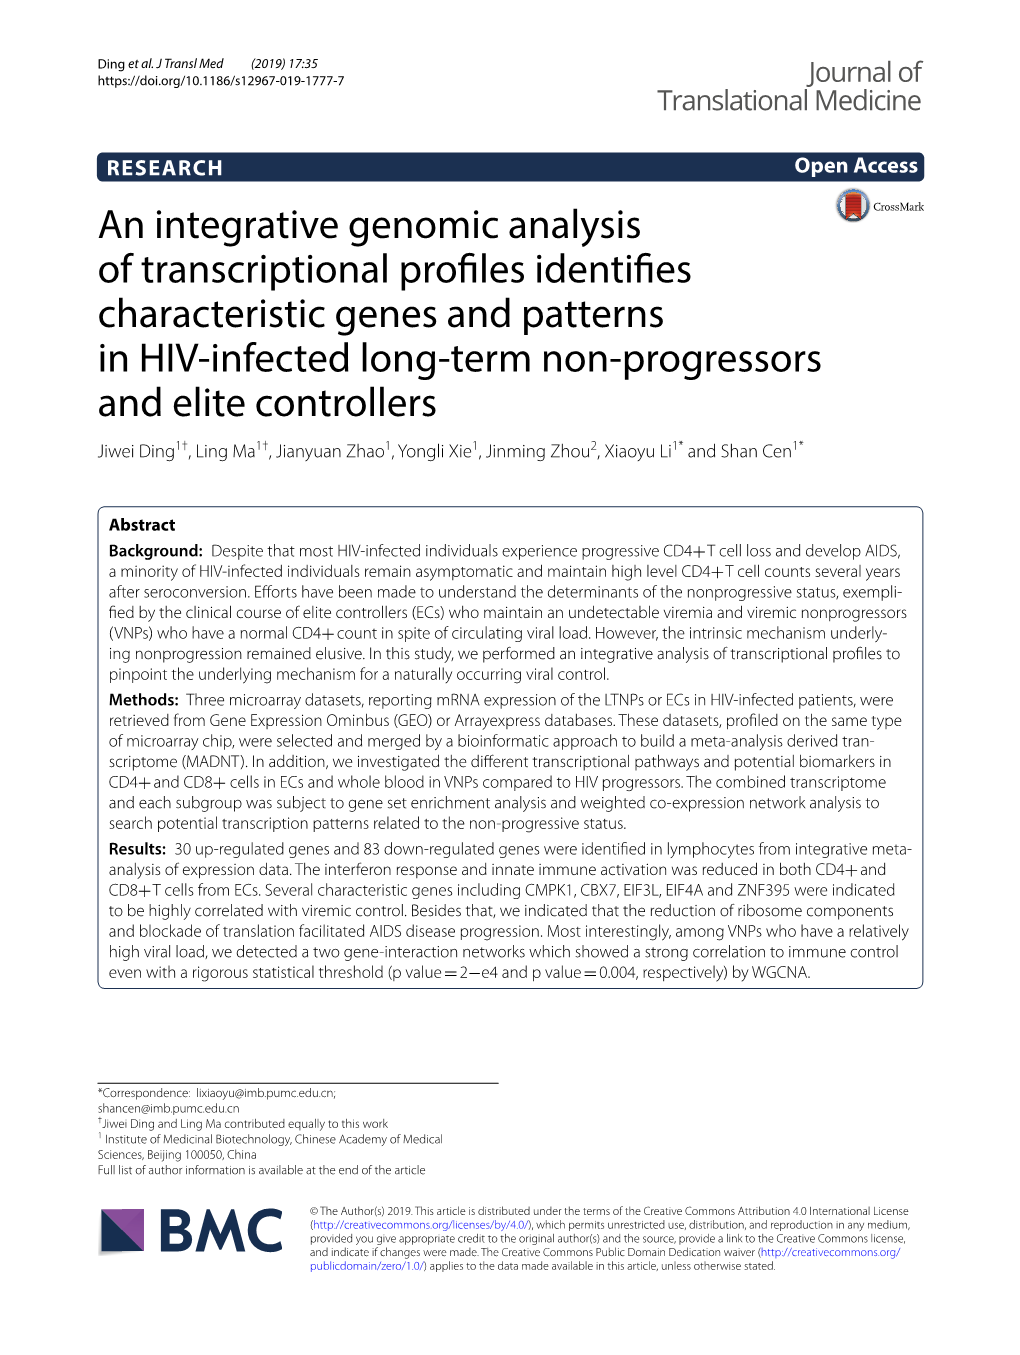 An Integrative Genomic Analysis of Transcriptional Profiles Identifies